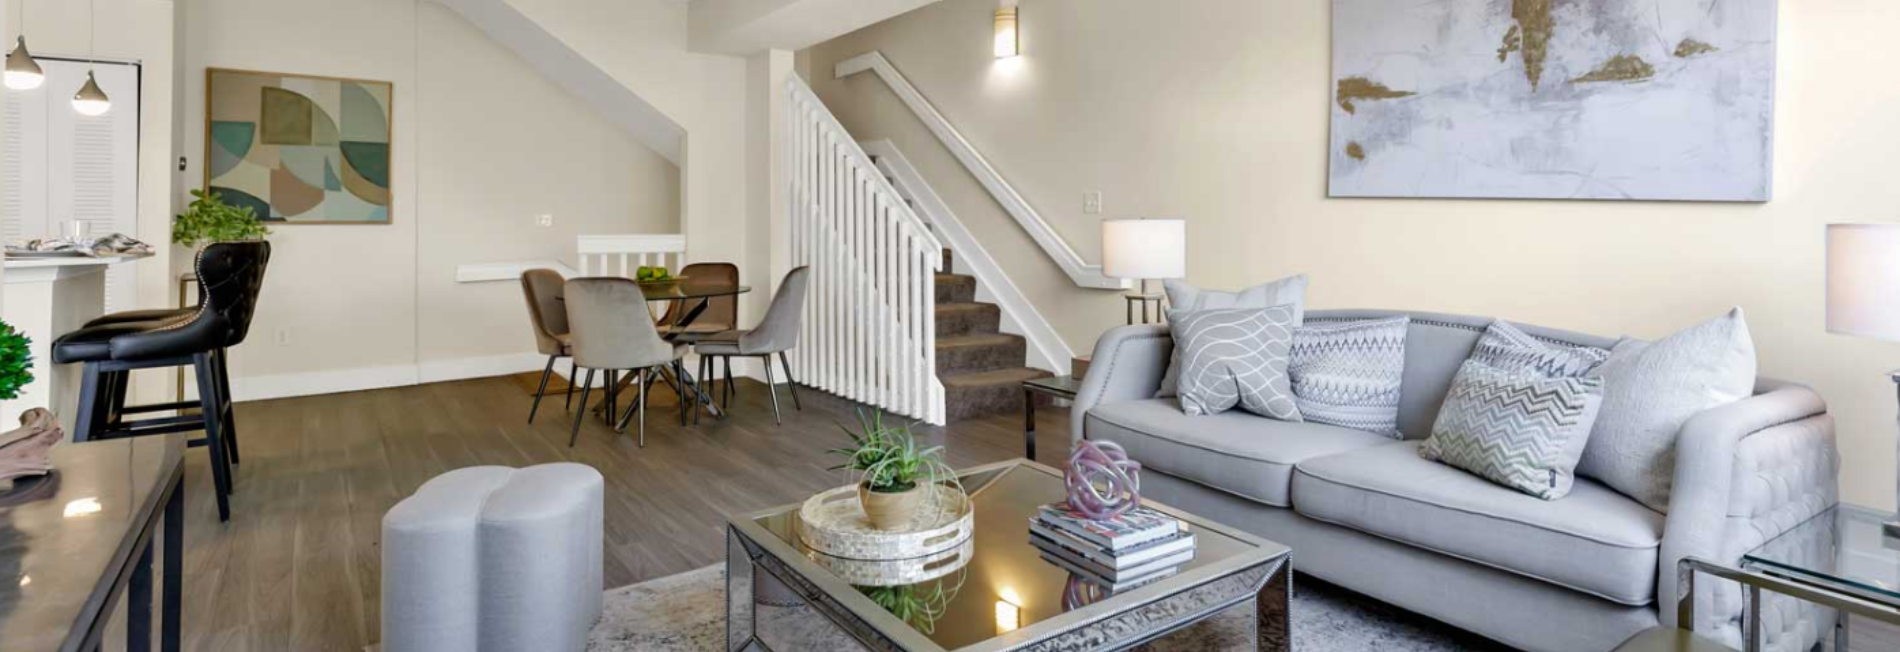 Stylish Living Room Interior in Windsor Castle Luxury Rental Community